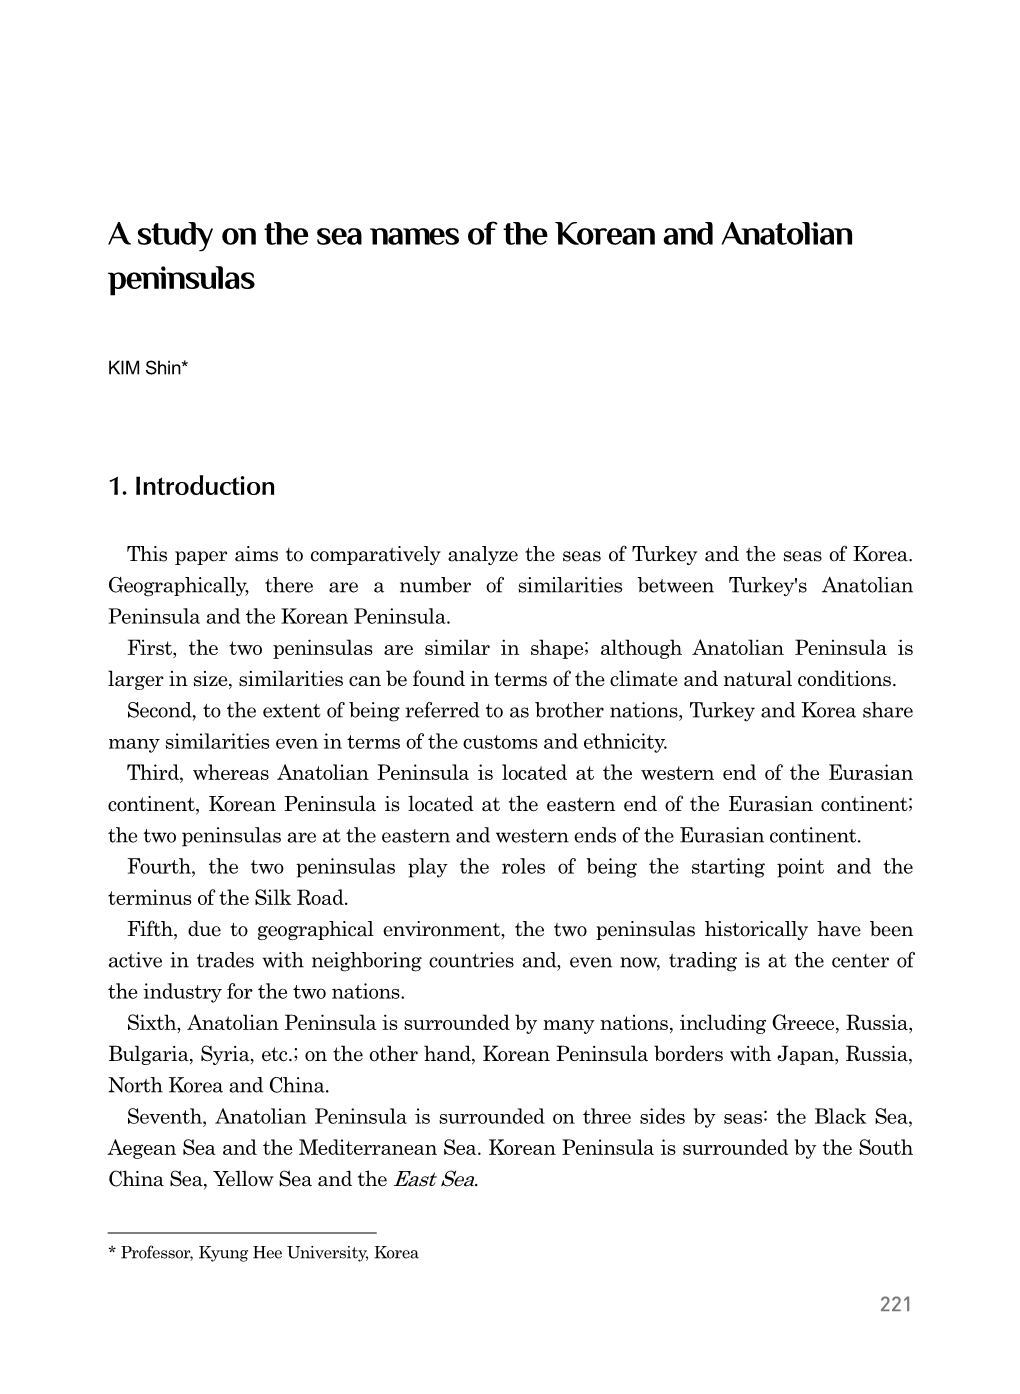 A Study on the Sea Names of the Korean and Anatolian Peninsulas